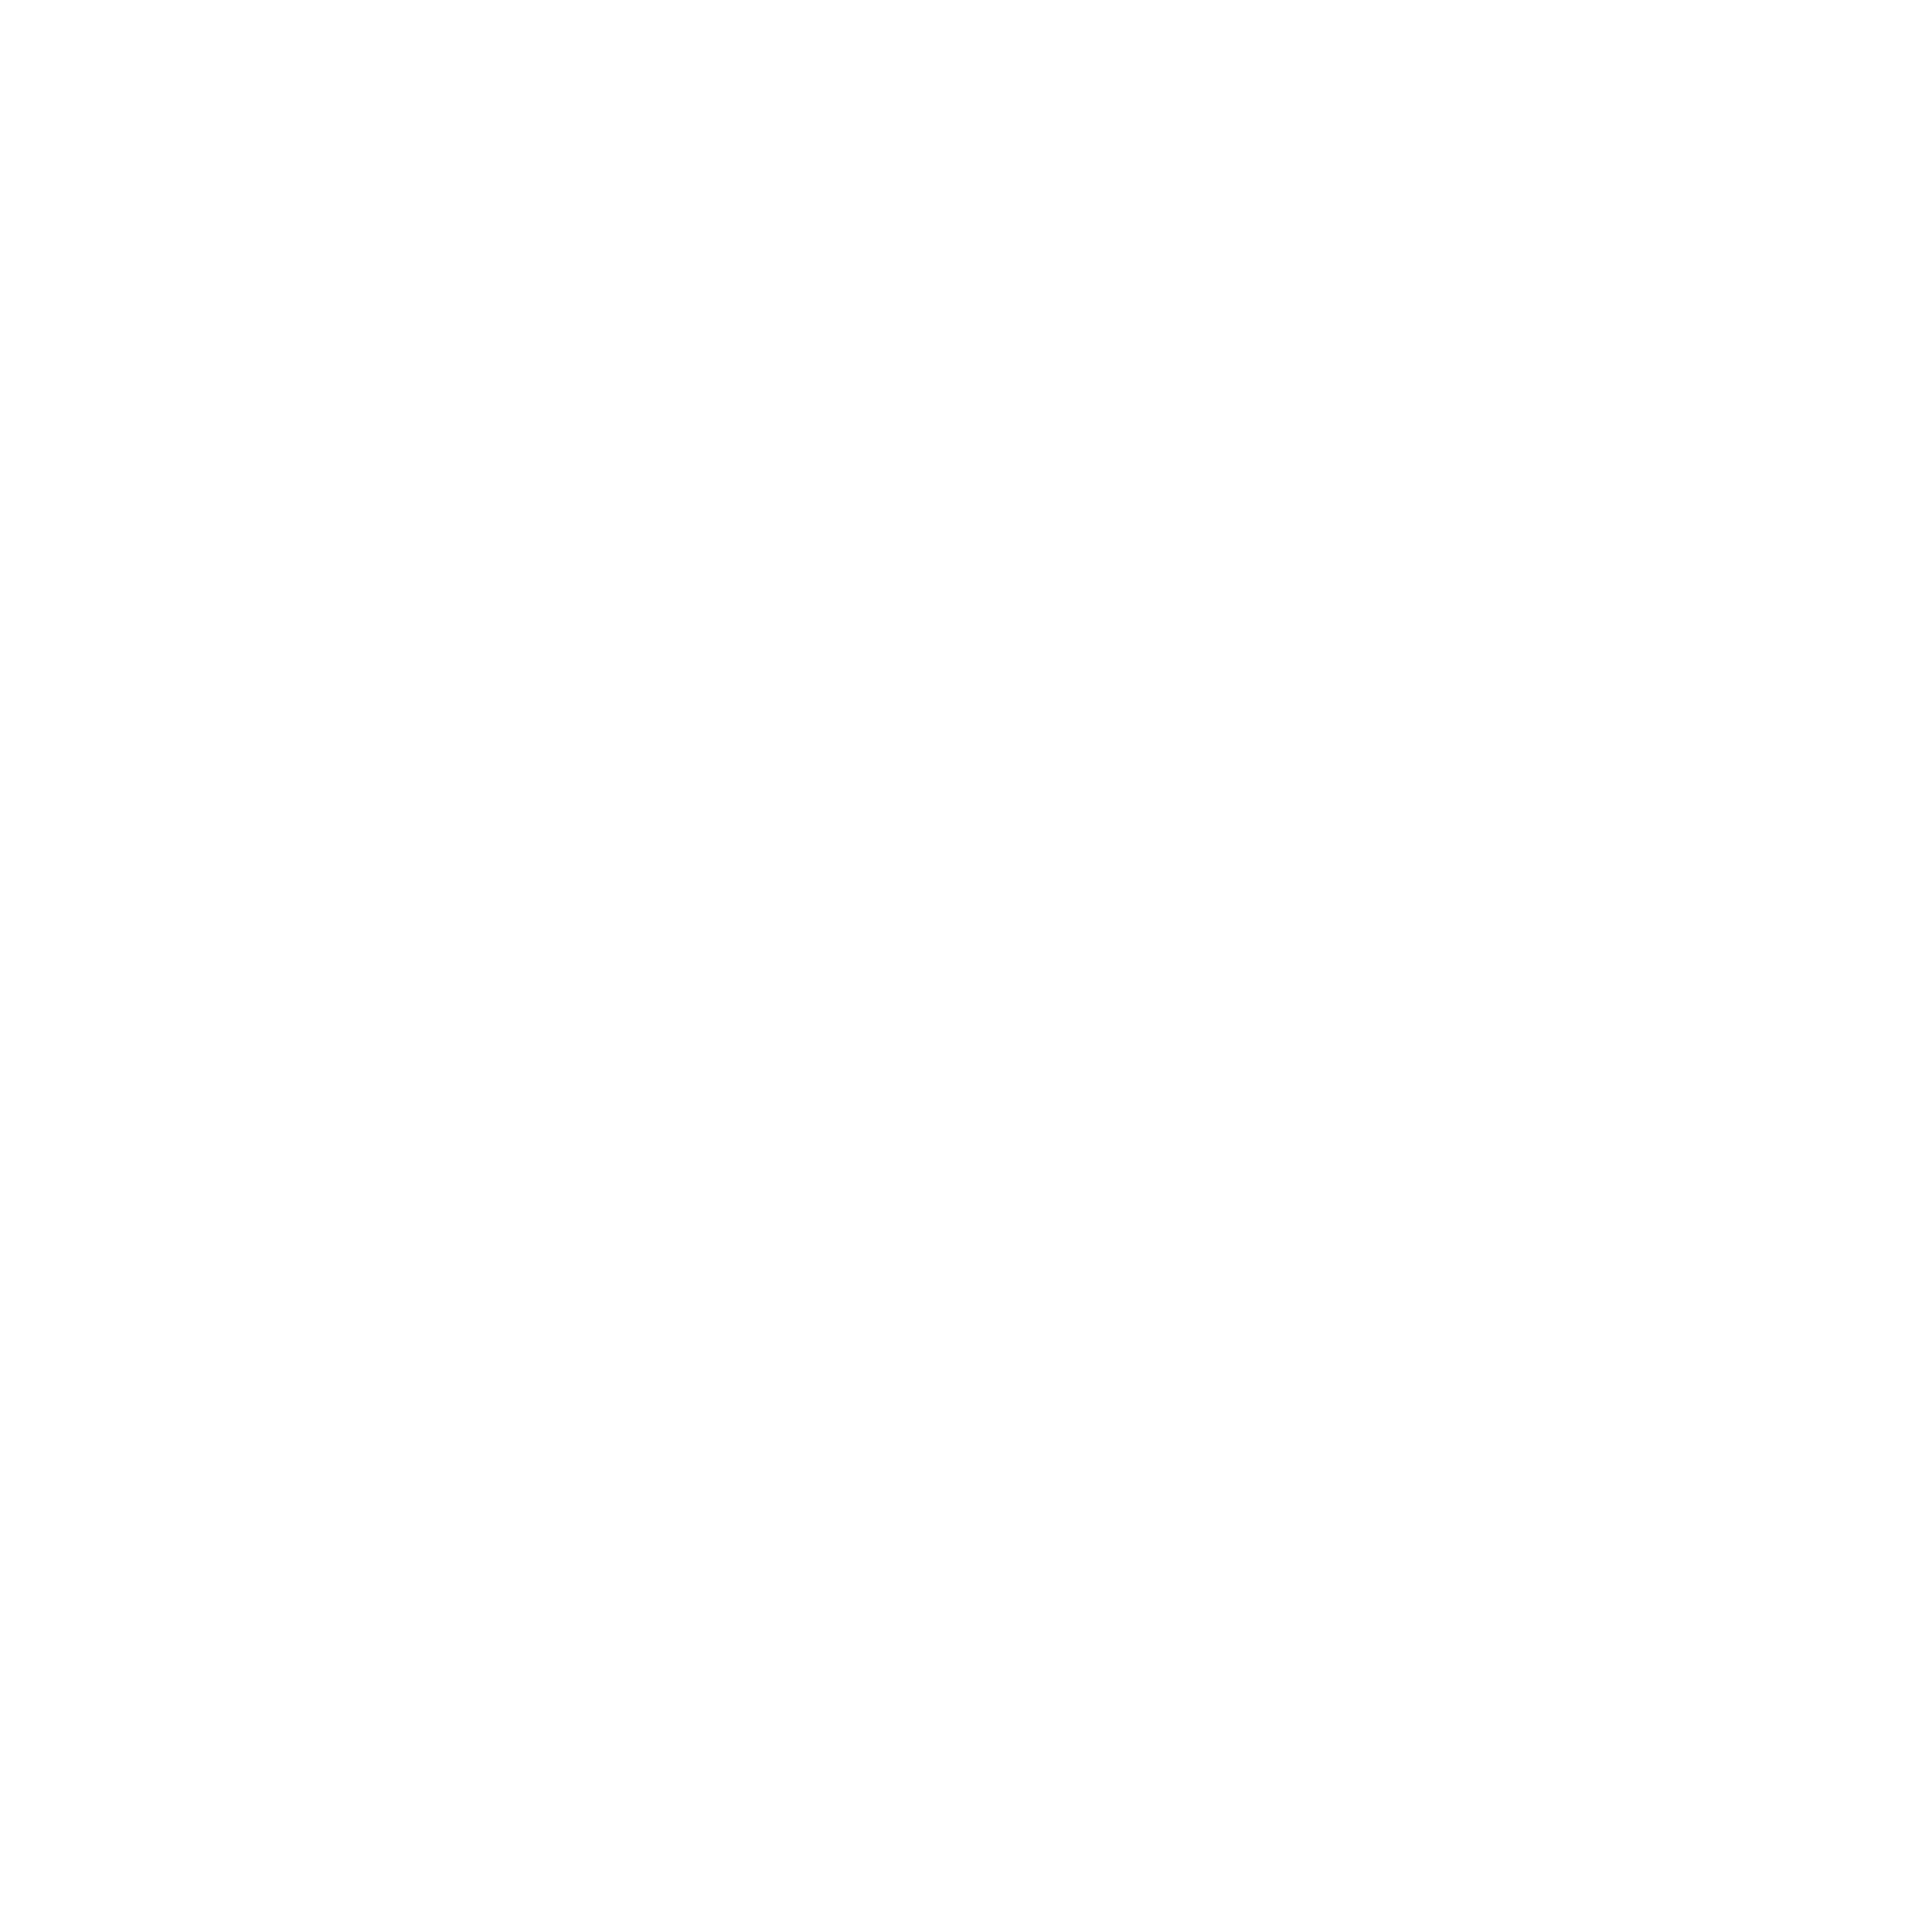 OCBC Logo - OCBC Bank Logo PNG Transparent & SVG Vector